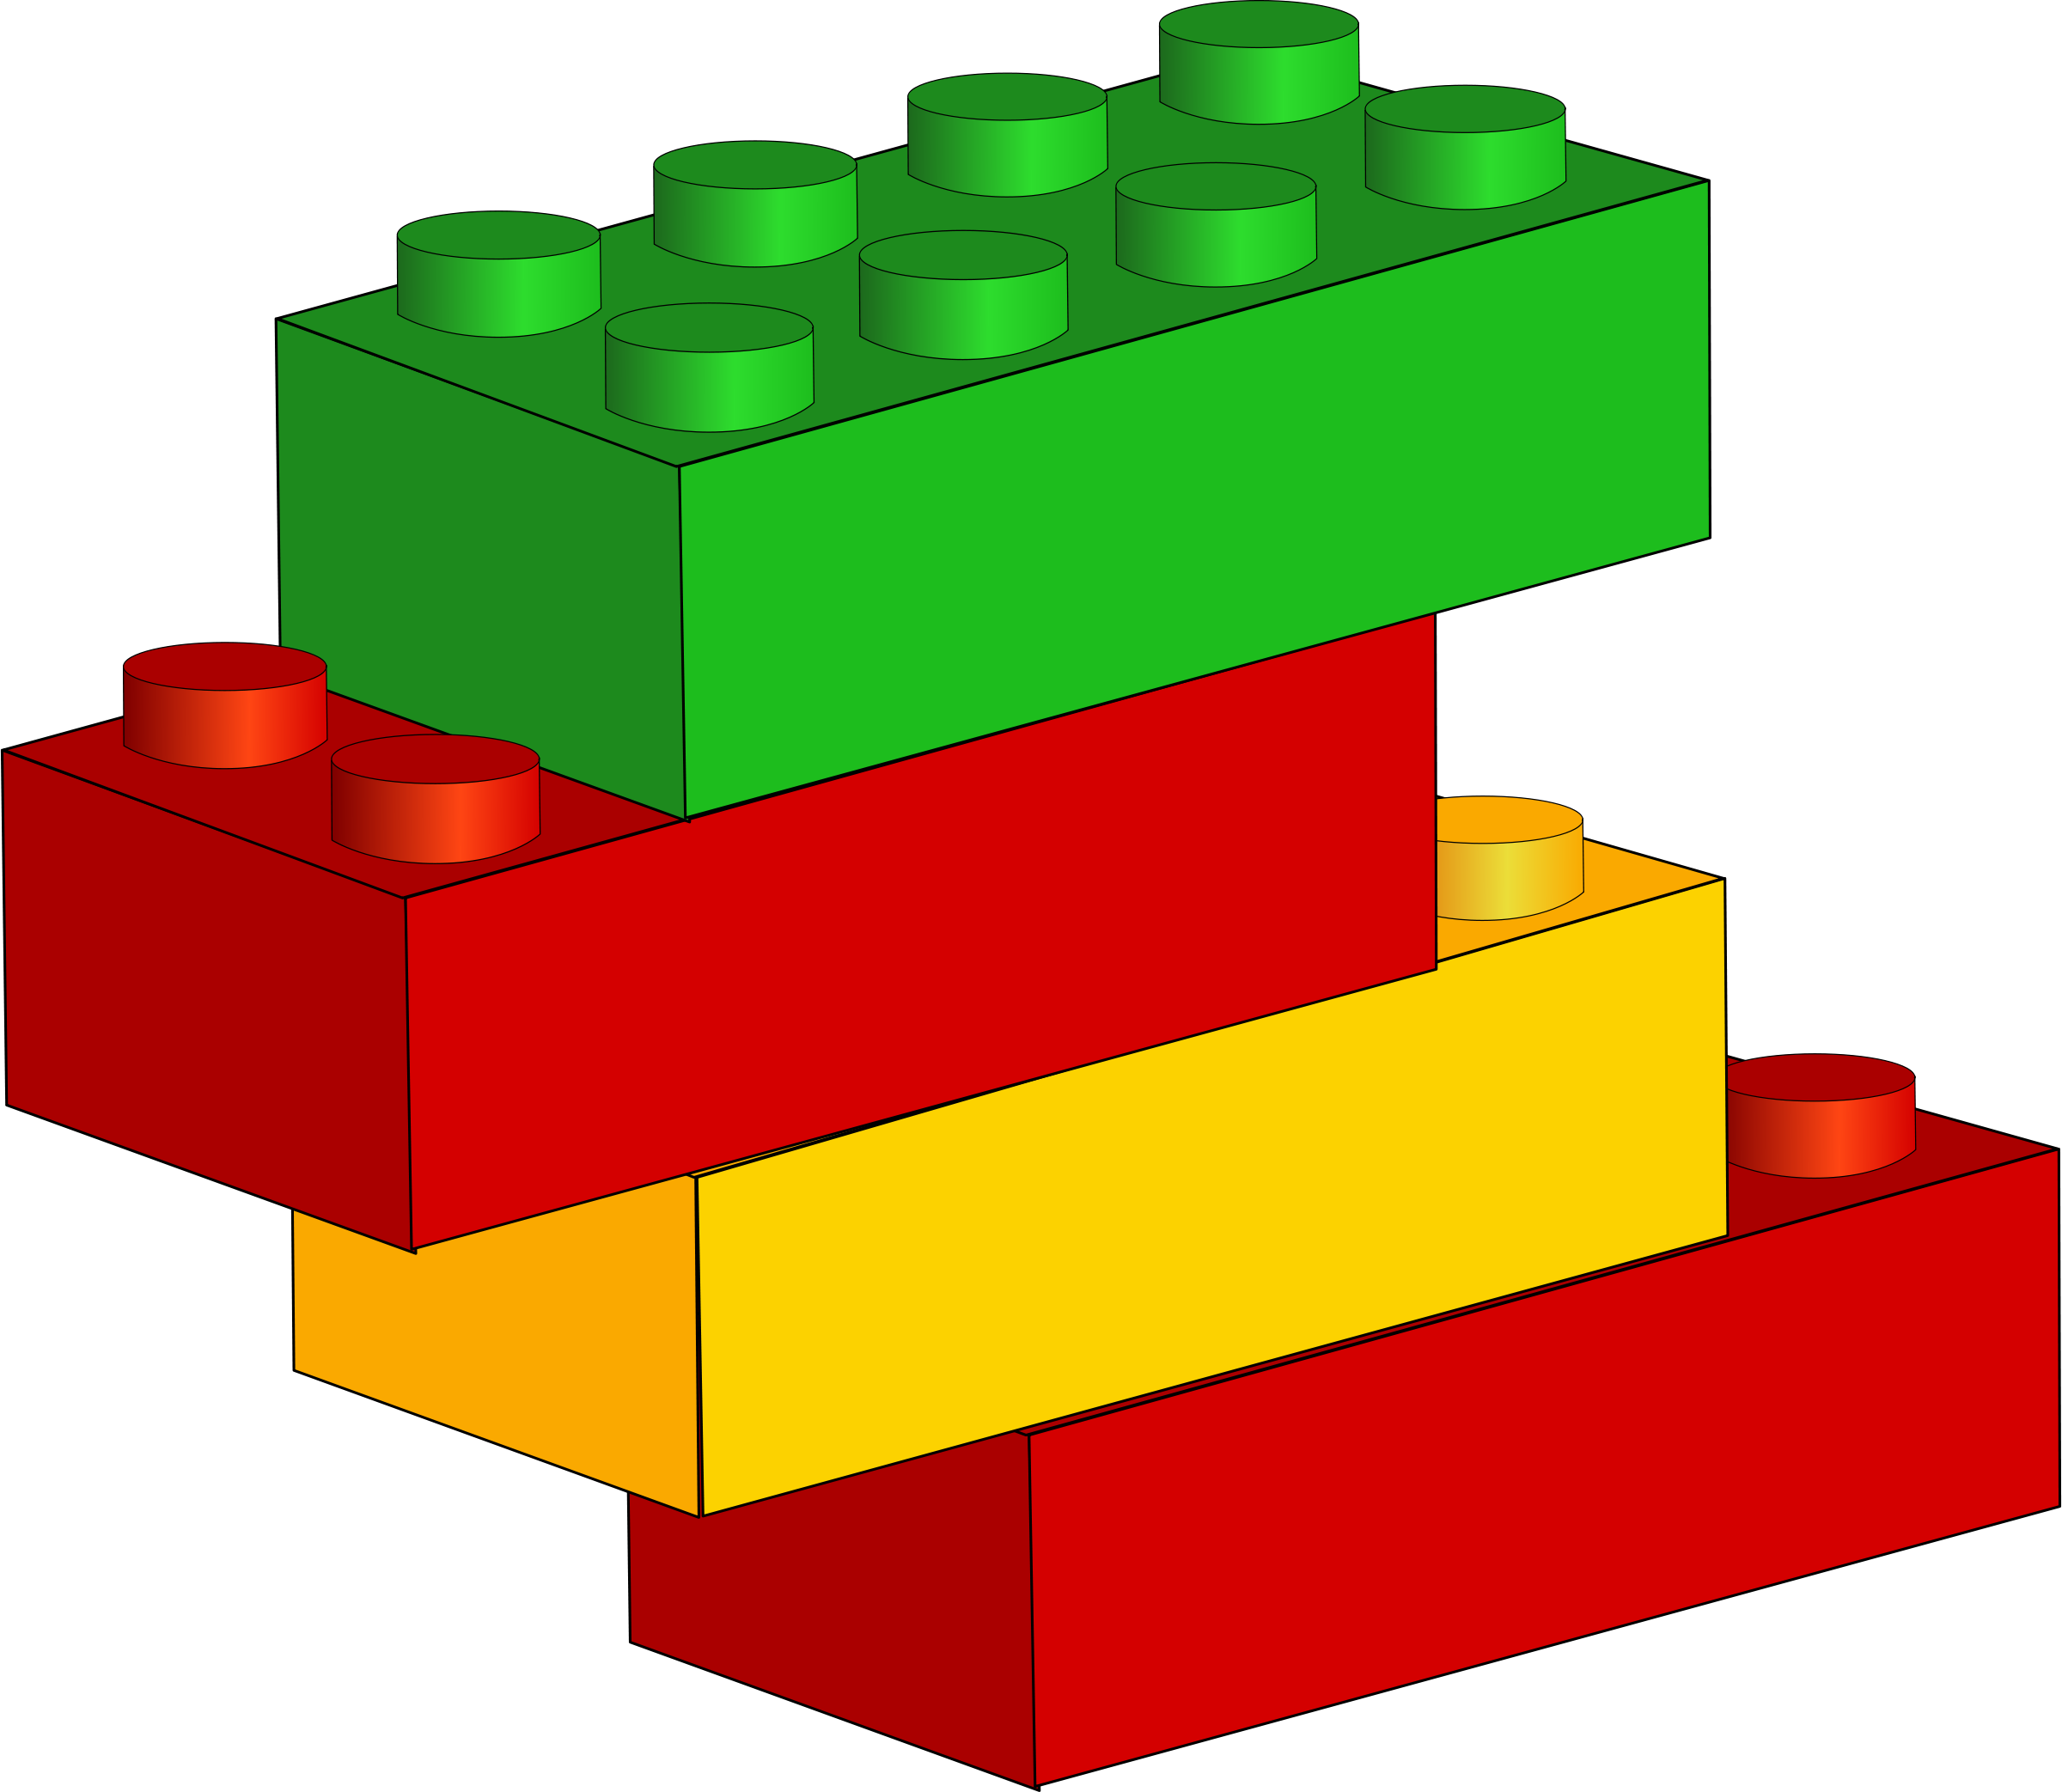 Lego brick clipart.